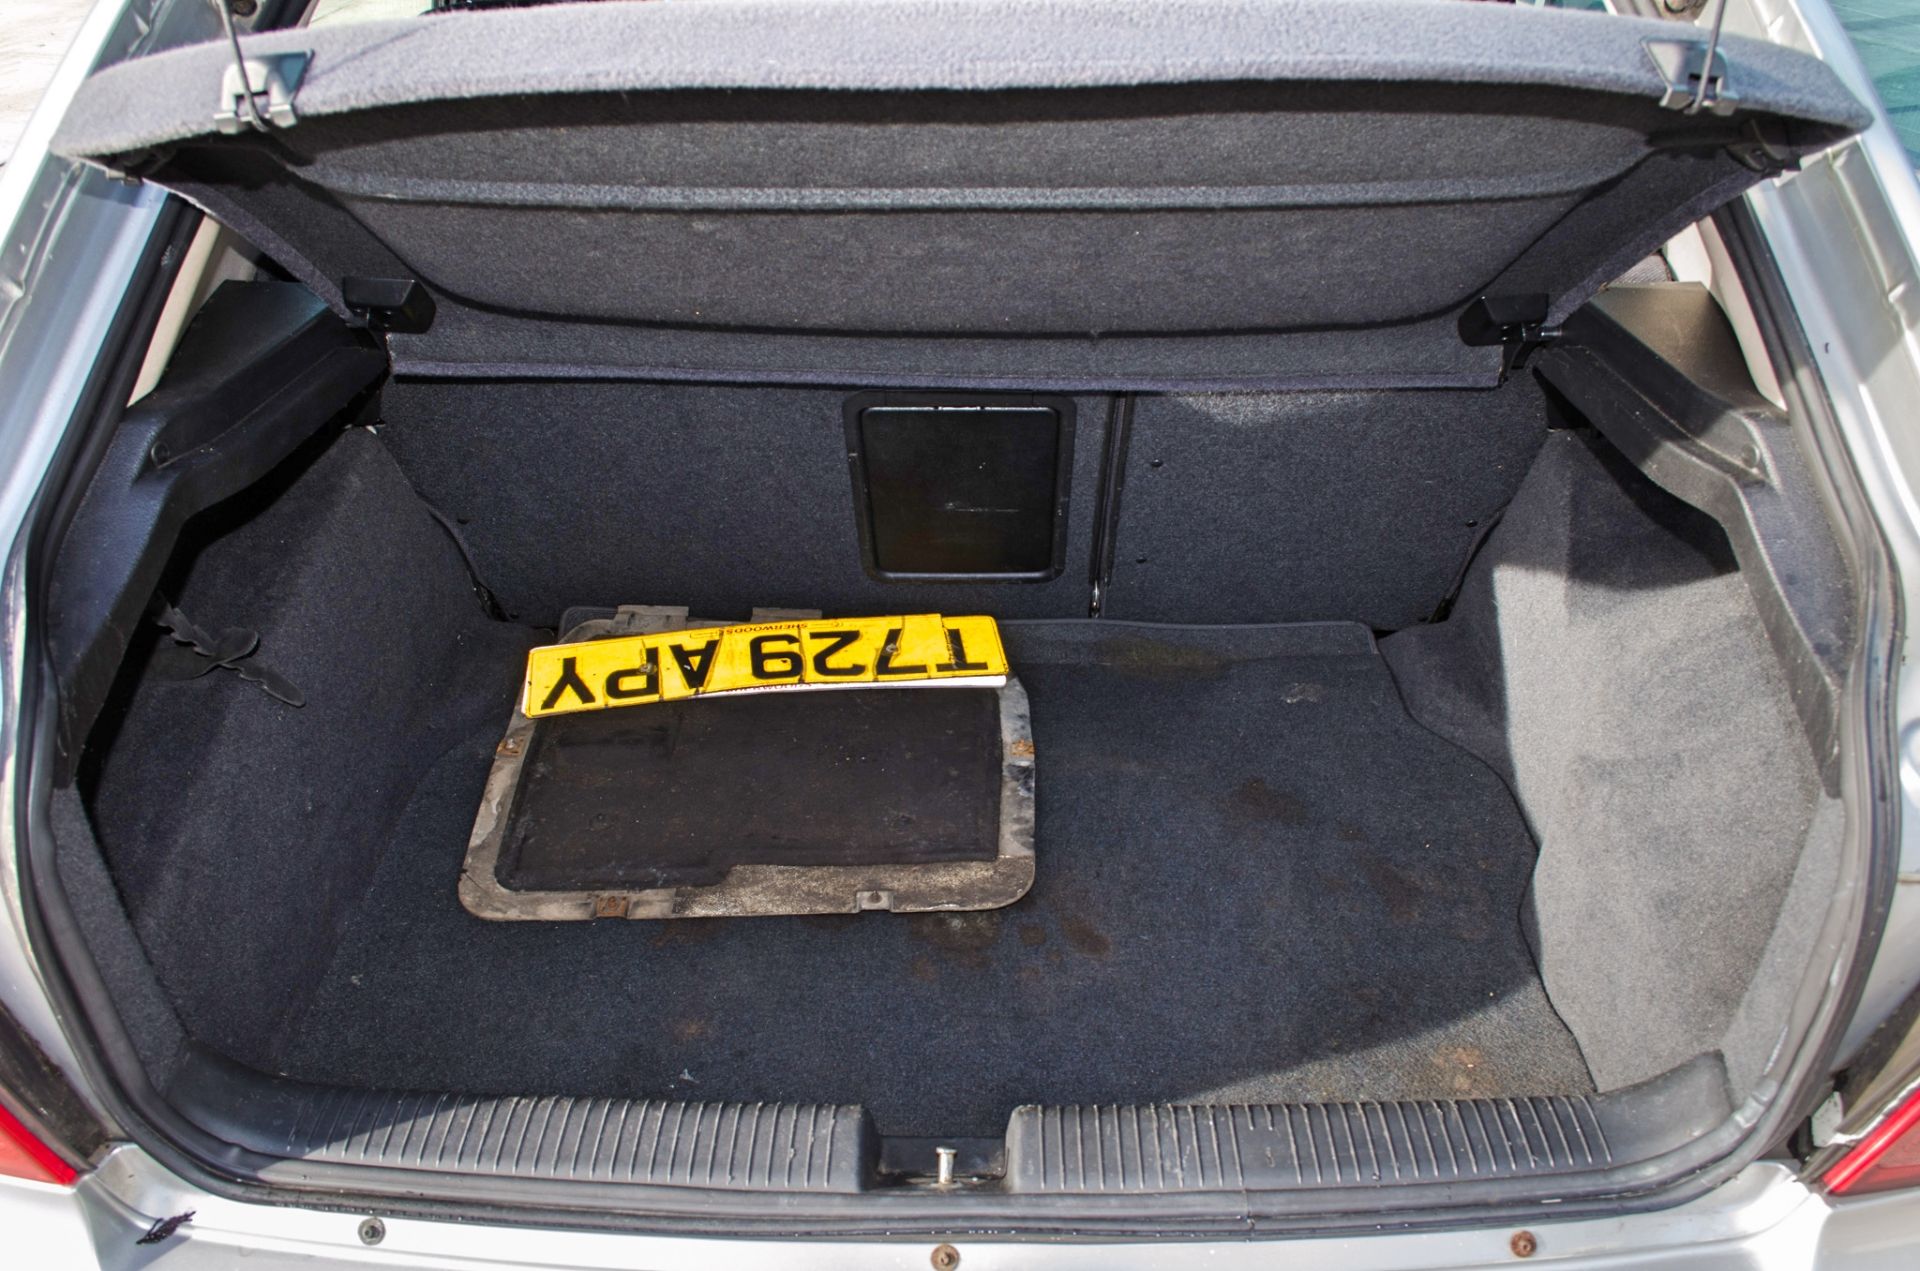 1999 Vauxhall Astra LS DI 16V 1995cc 5 door hatchback - Image 48 of 55